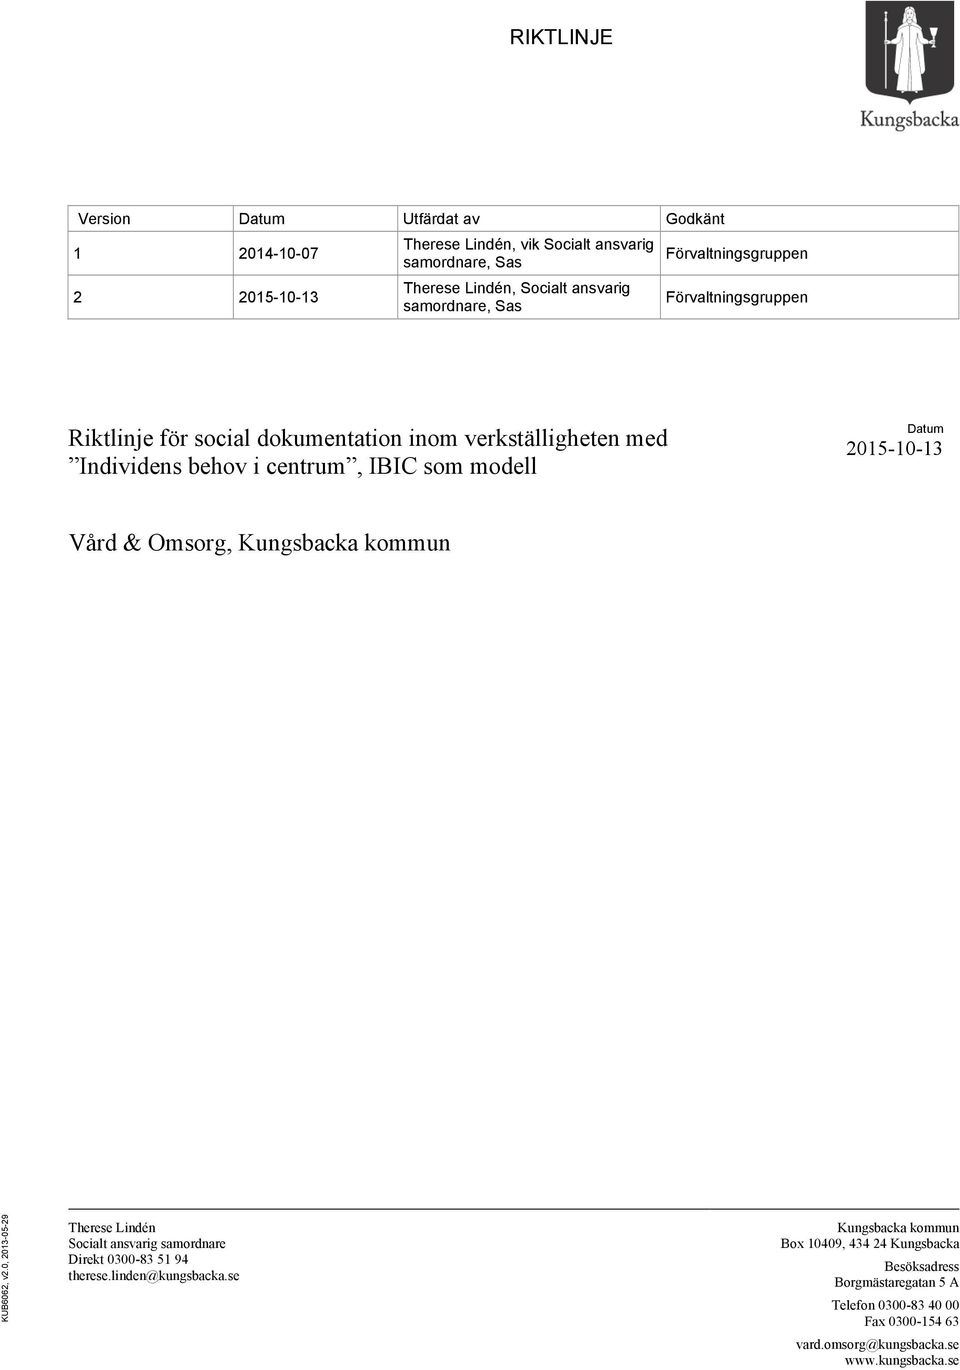 Datum 2015-10-13 Vård & Omsorg, Kungsbacka kommun KUB6062, v2.0, 2013-05-29 Therese Lindén Socialt ansvarig samordnare Direkt 0300-83 51 94 therese.